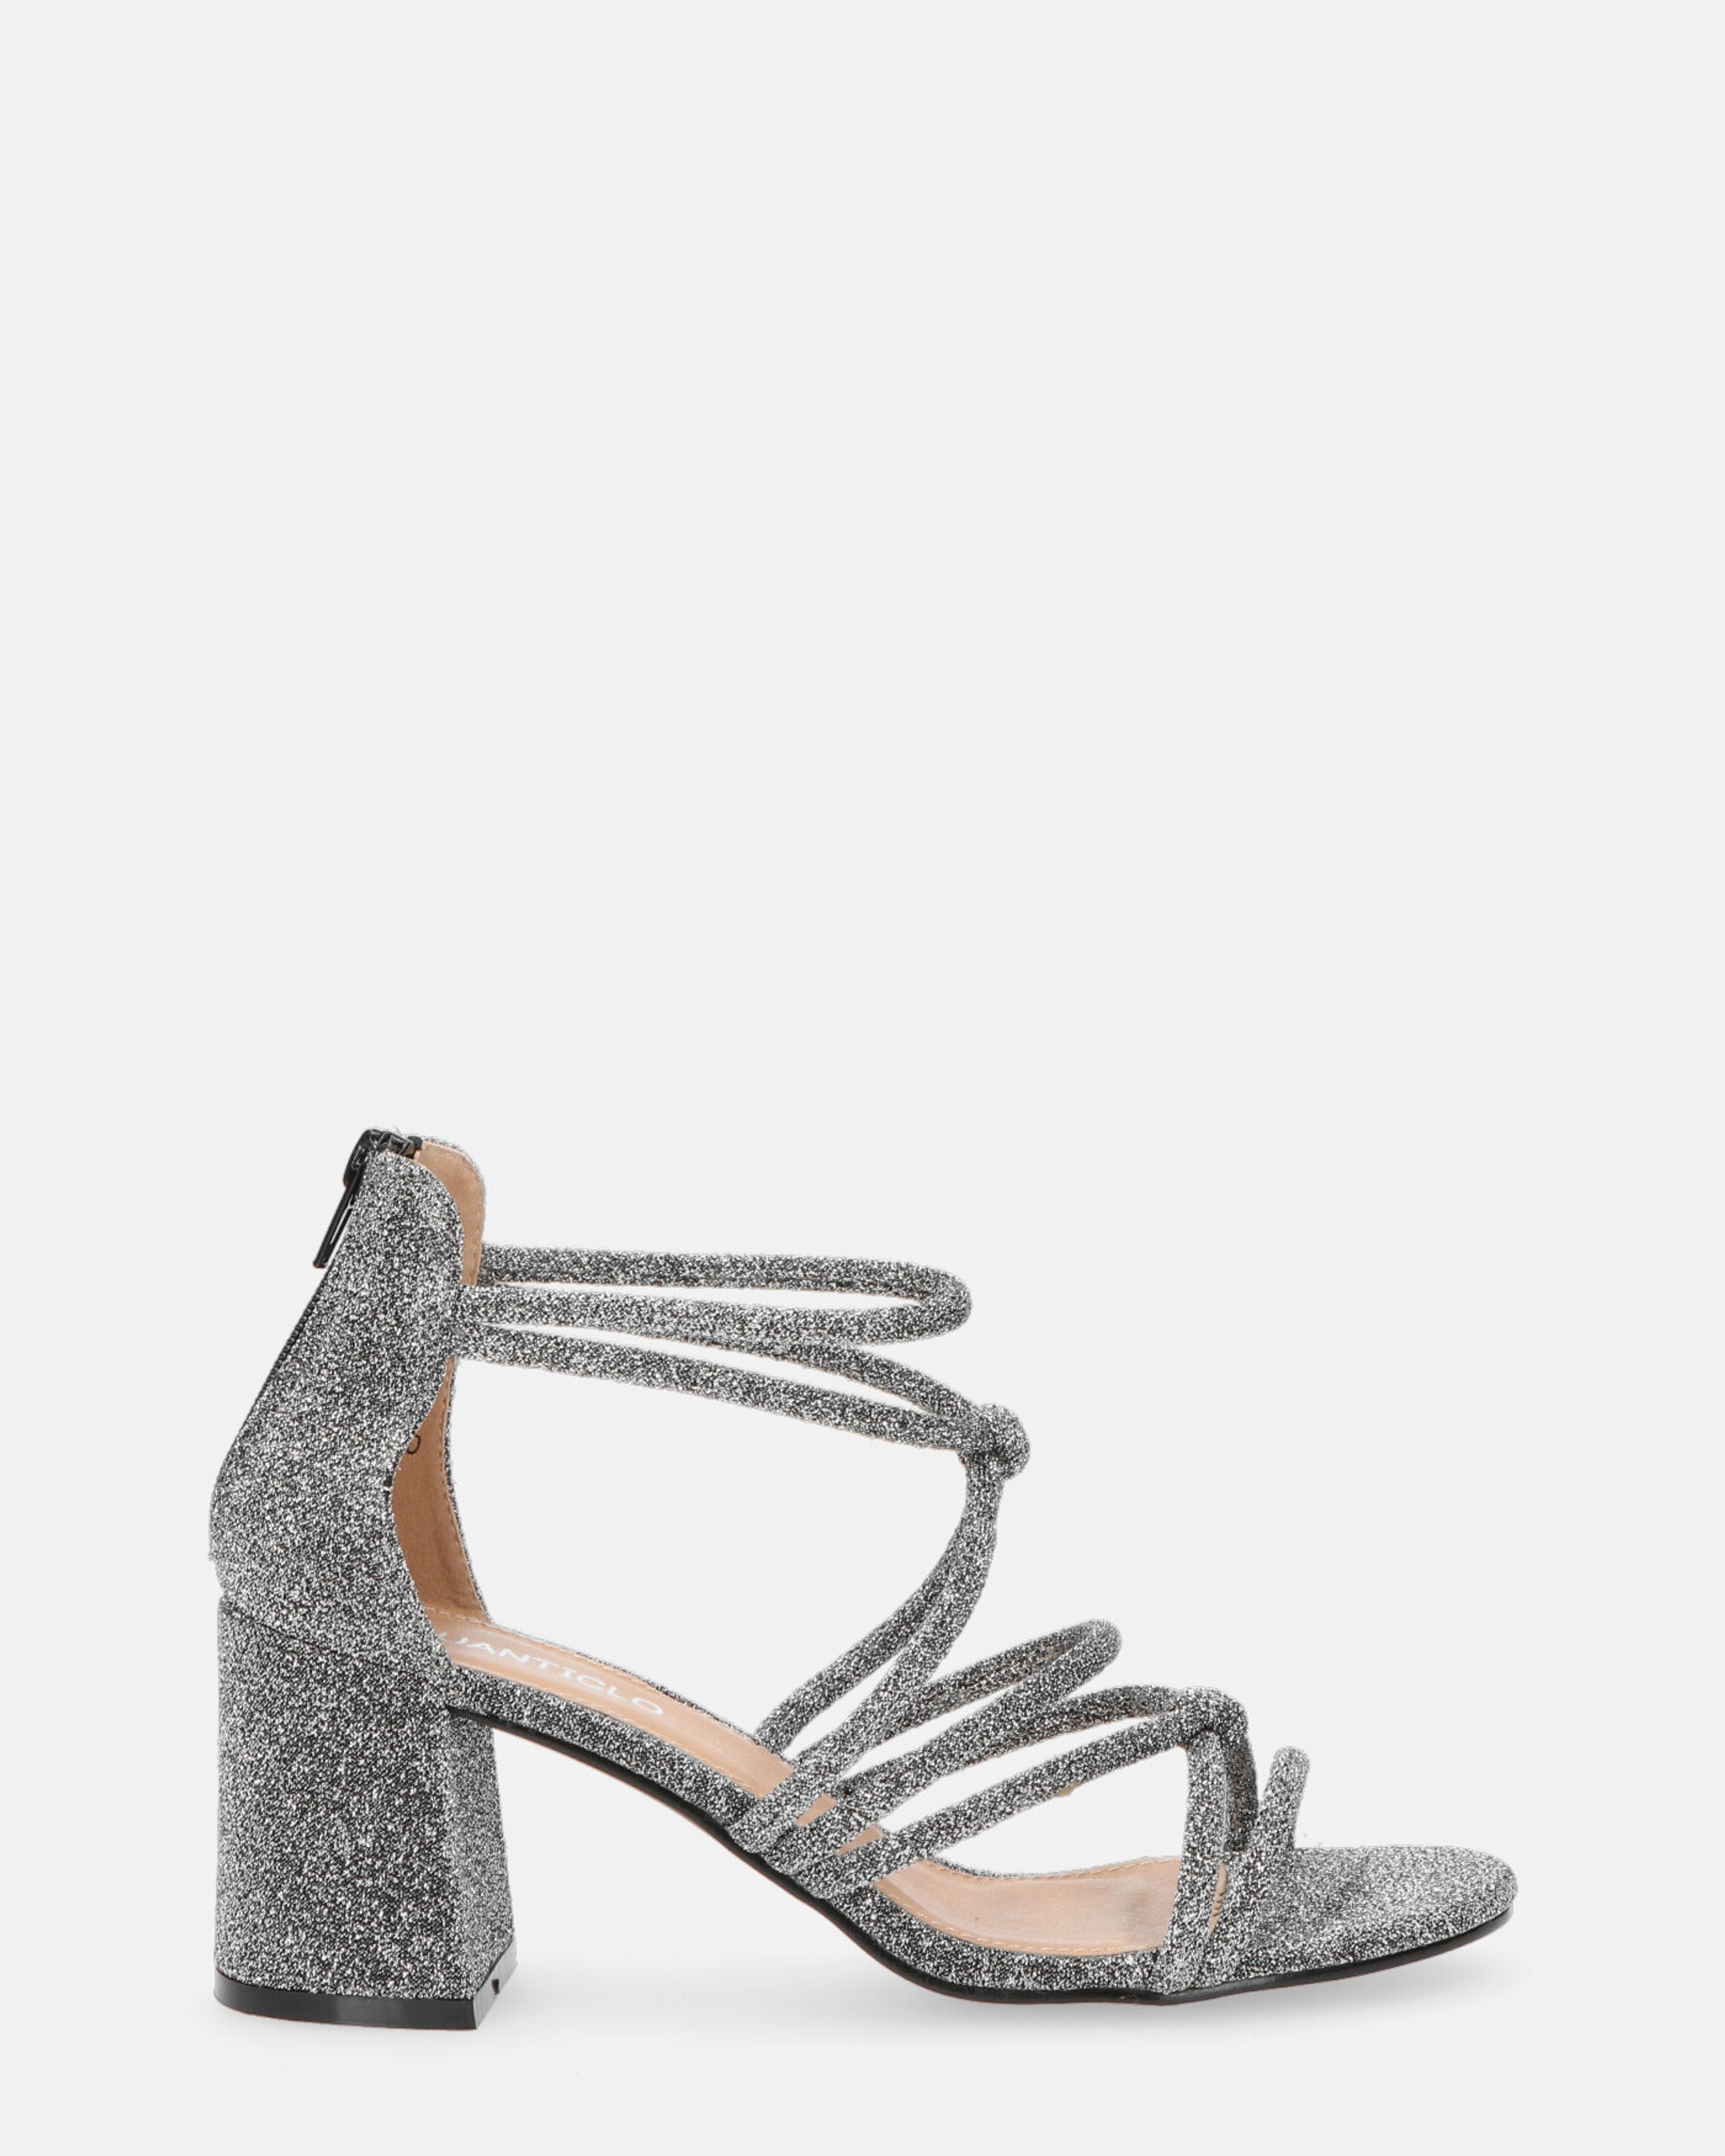 FAITH - multi strap mid heel sandals in grey